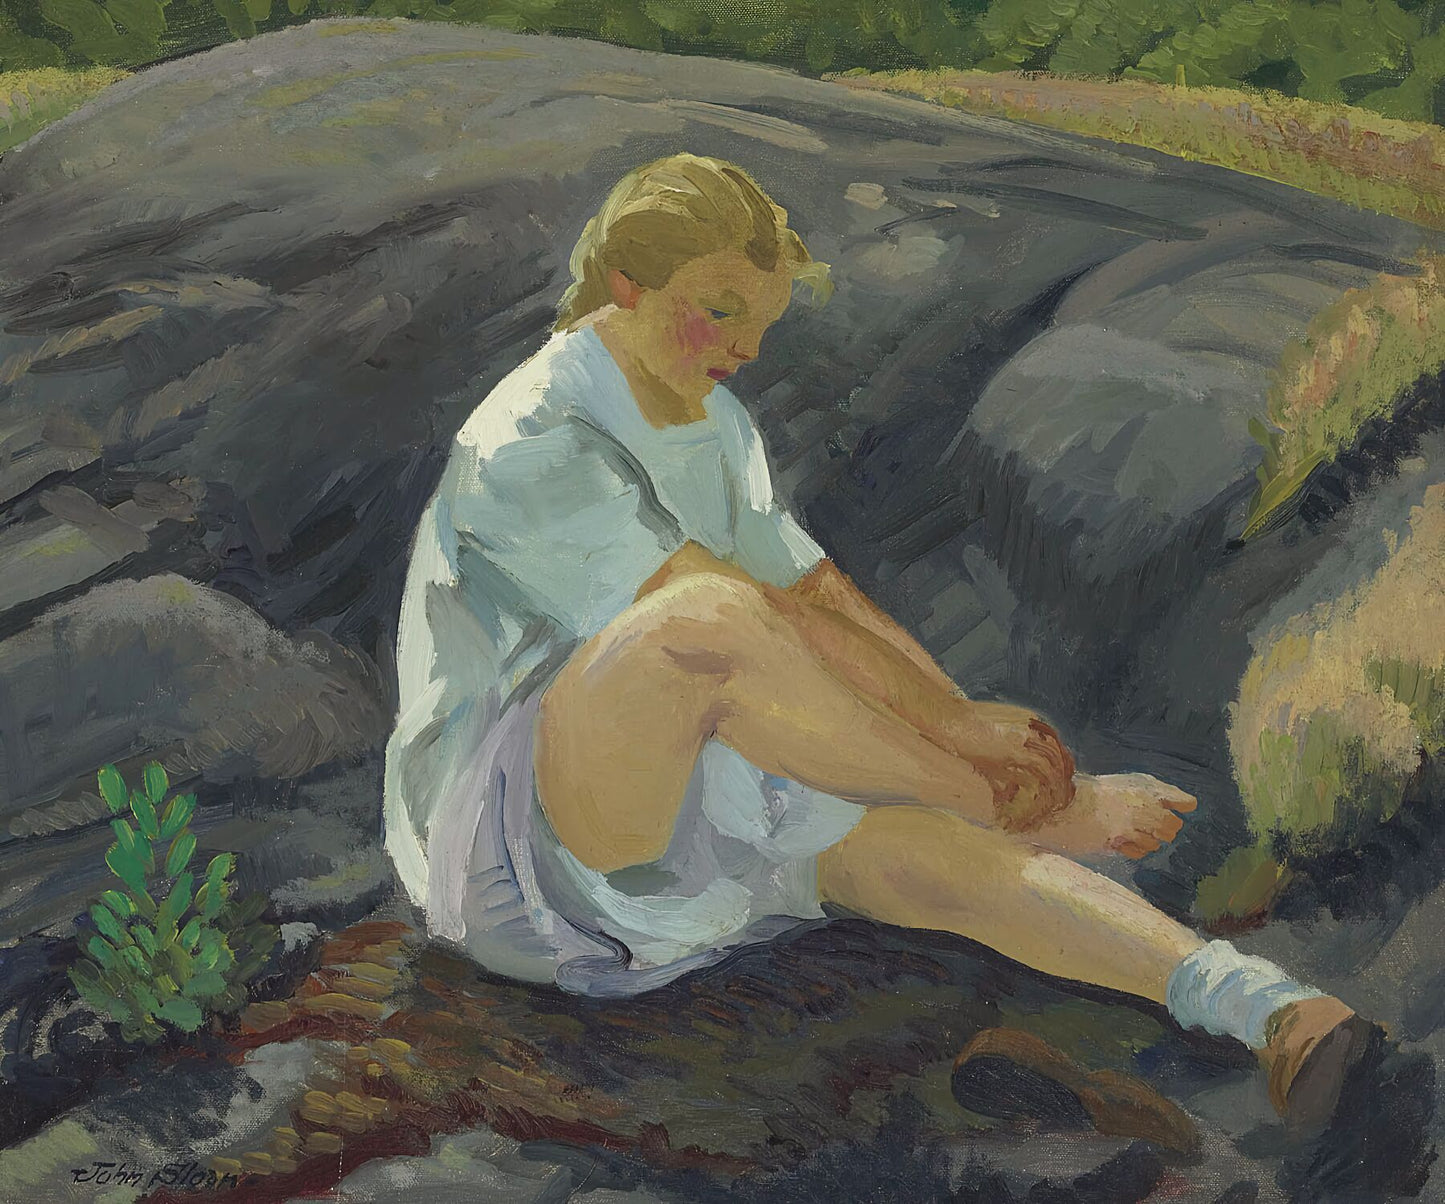 Going Barefoot  by John Sloan - 1915